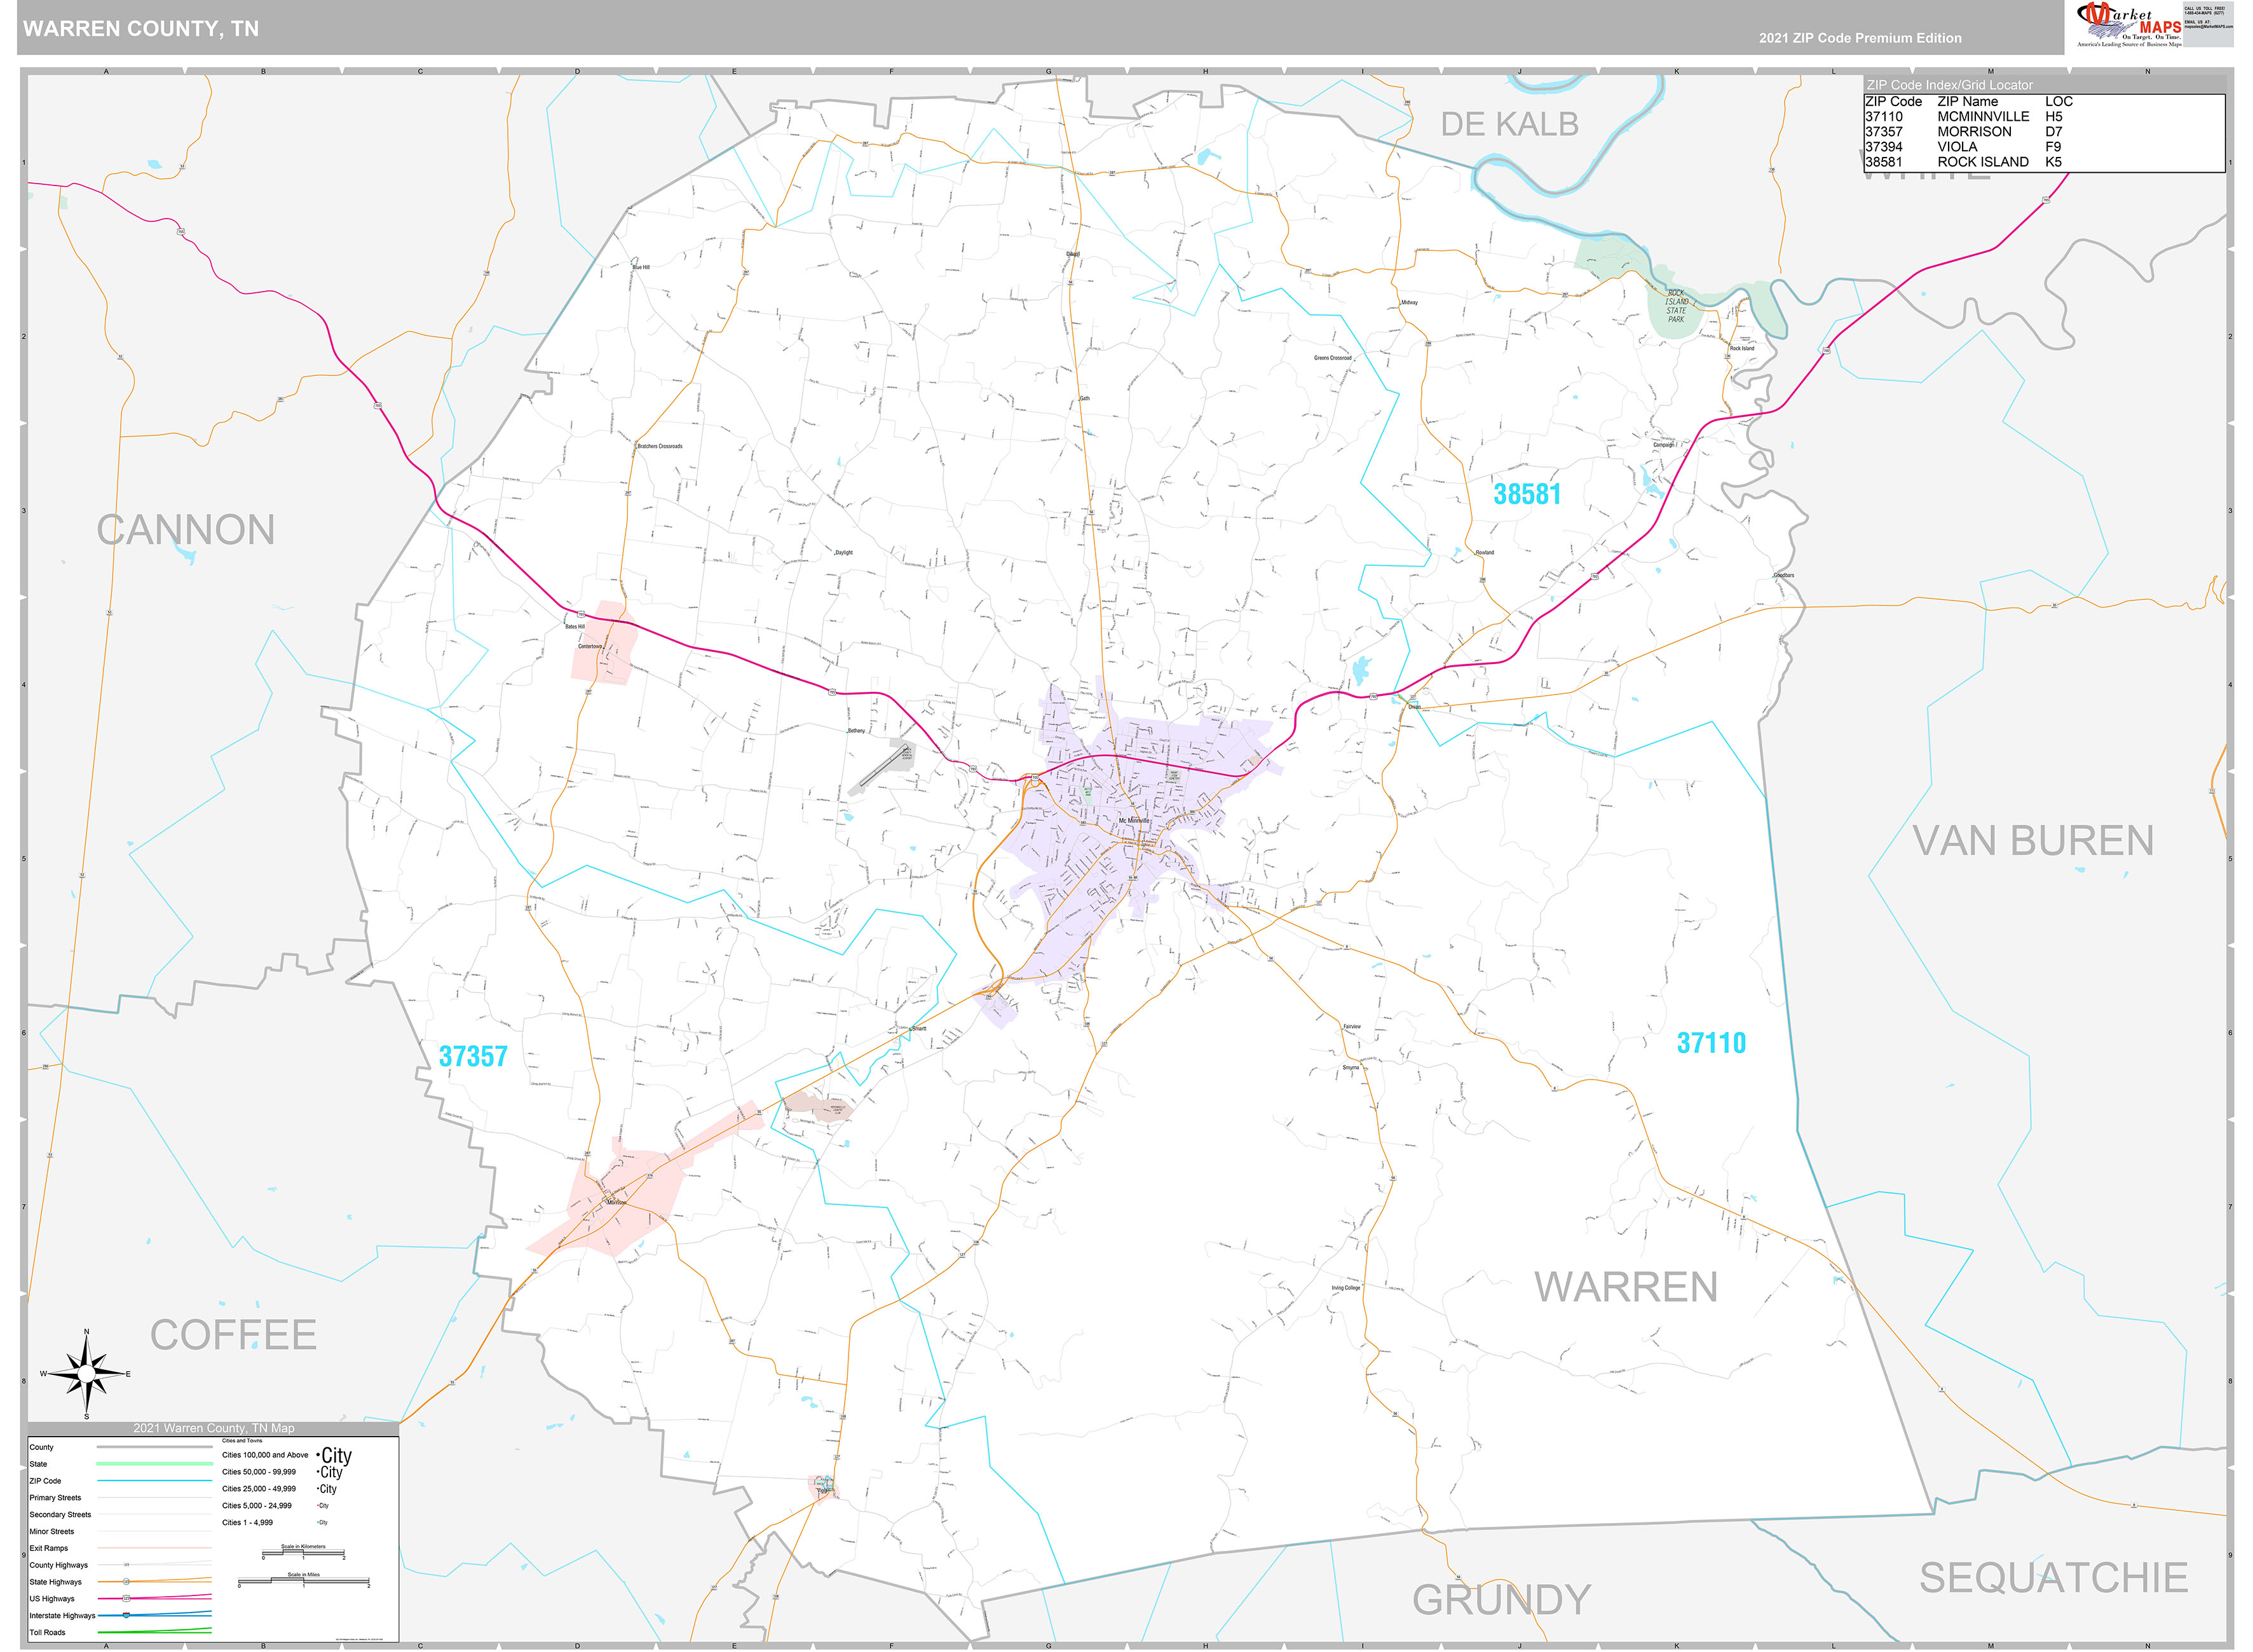 Warren County, TN Wall Map Premium Style by MarketMAPS - MapSales.com